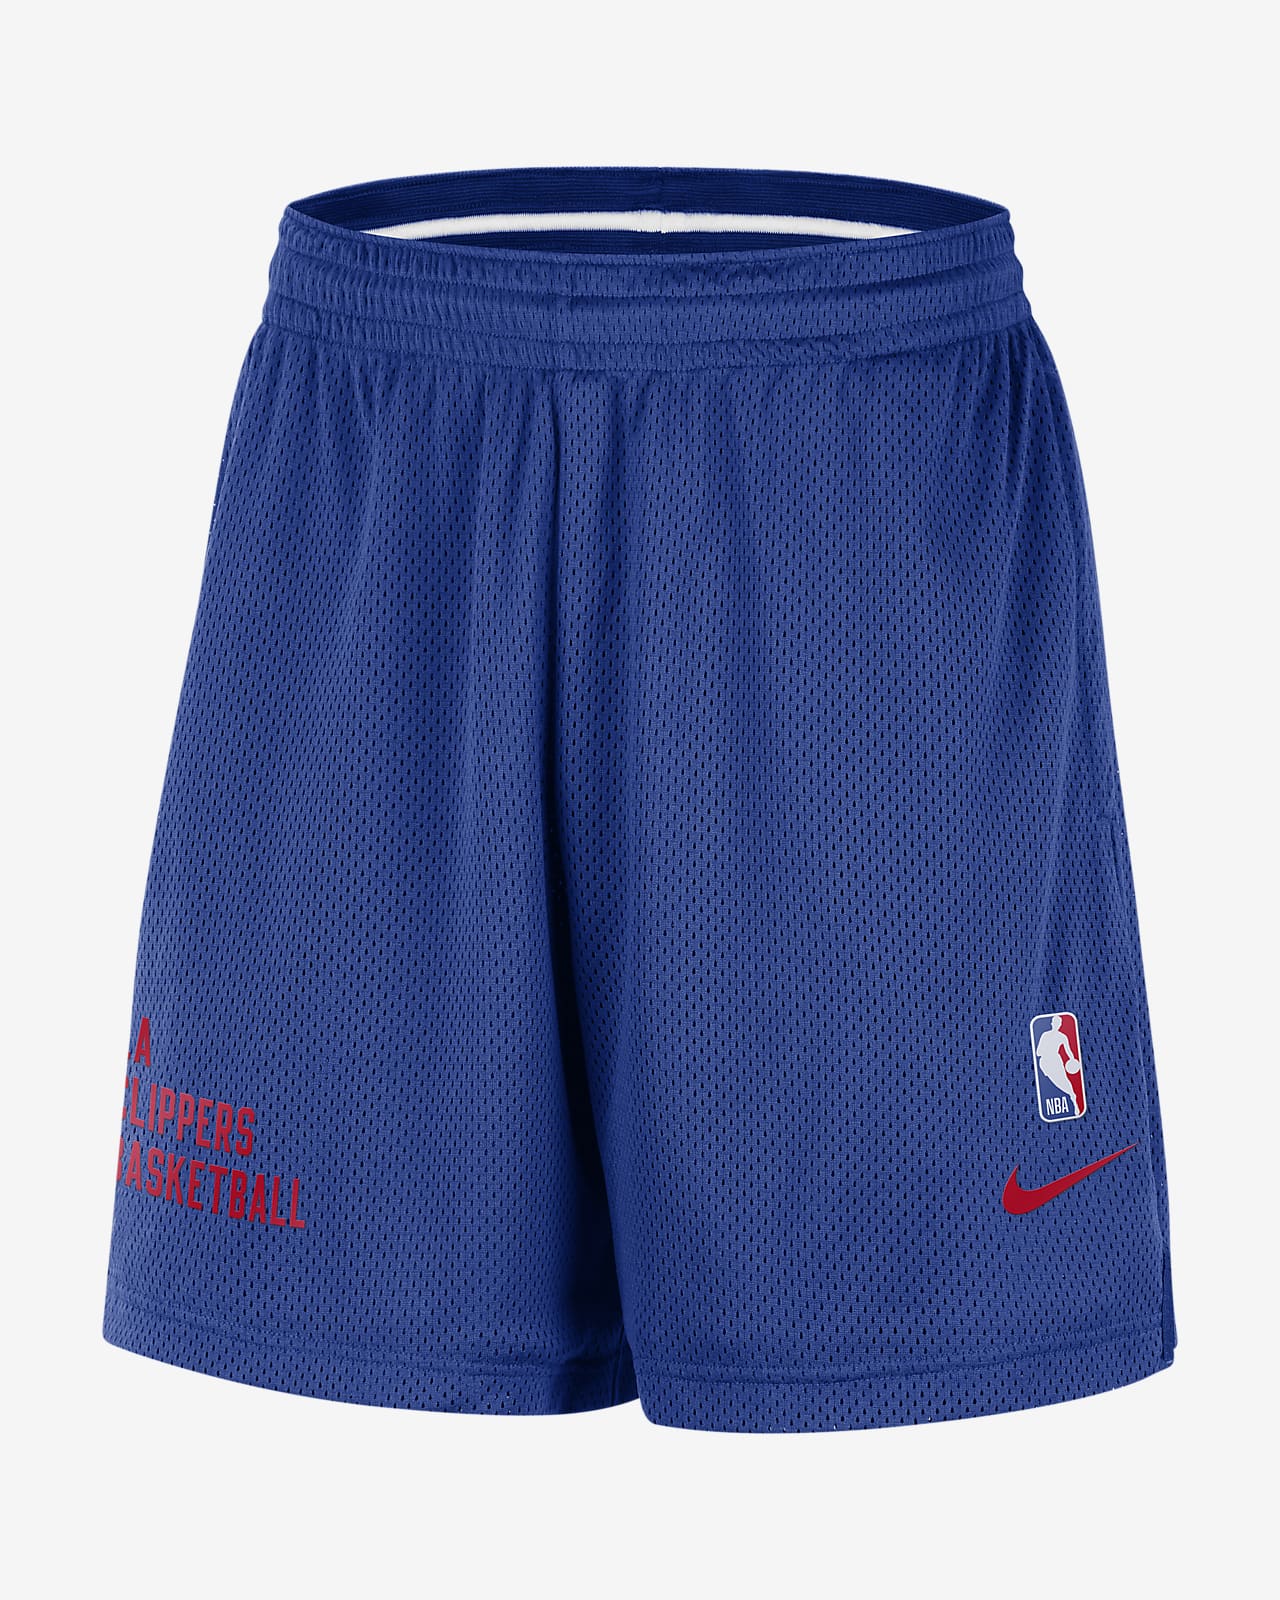 LA Clippers Men's Nike NBA Mesh Shorts